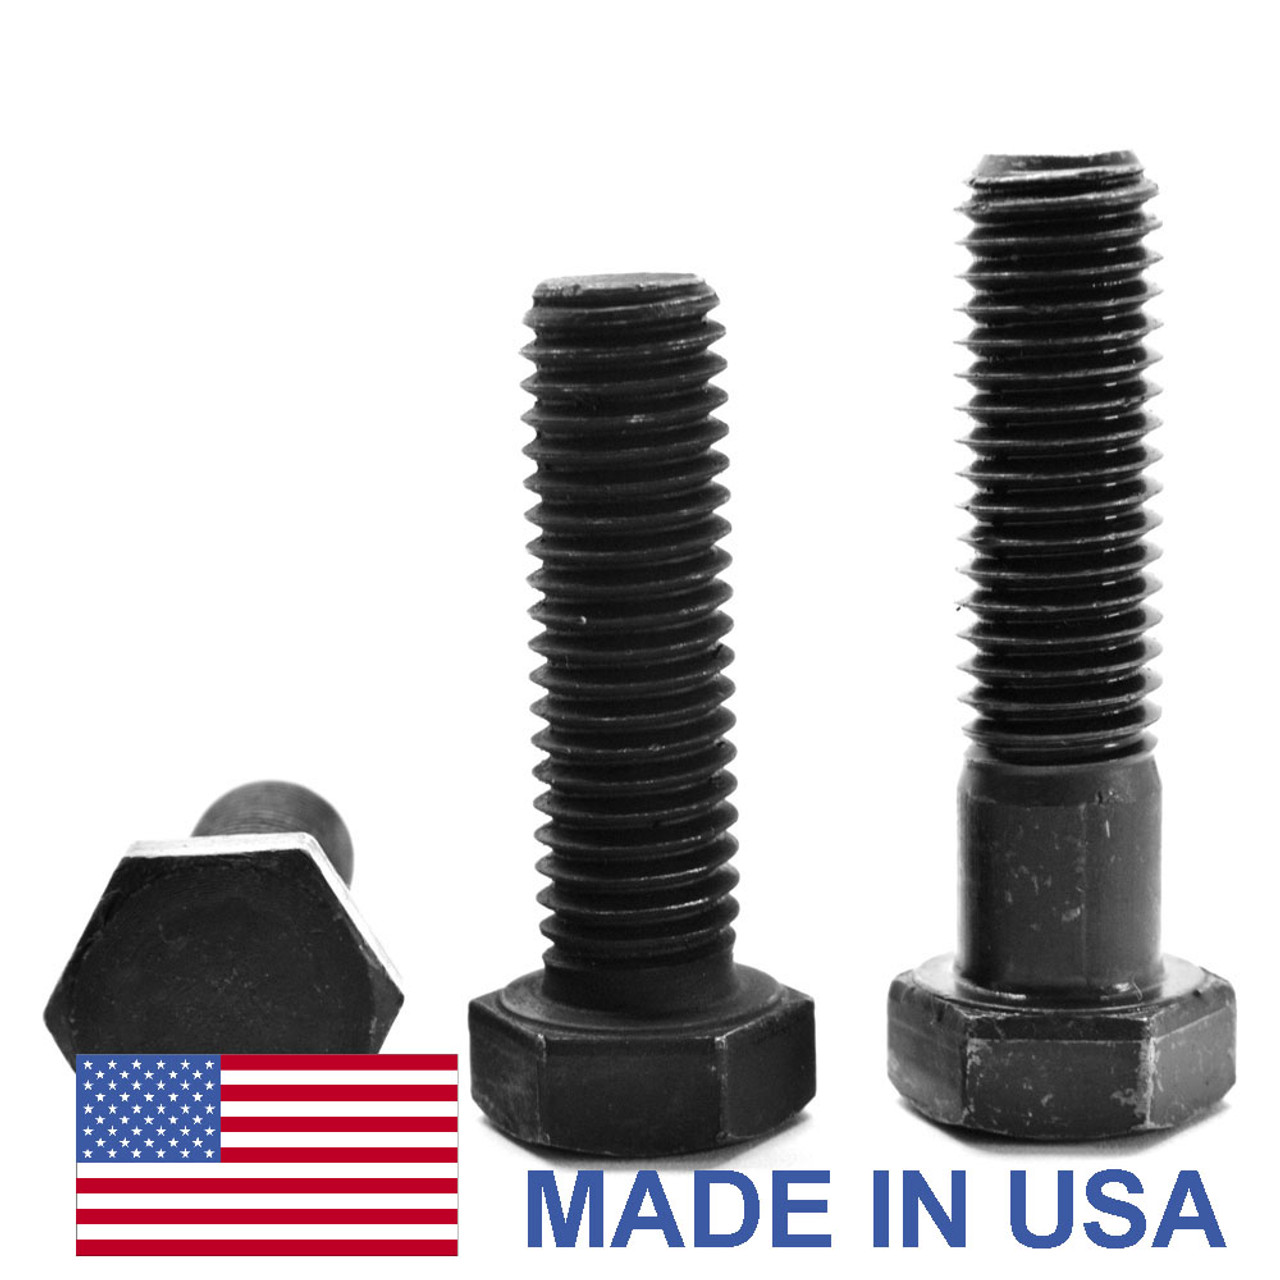 7/16"-14 x 6" (PT) Coarse Thread Grade 8 Hex Cap Screw (Bolt) - USA Alloy Steel Black Oxide